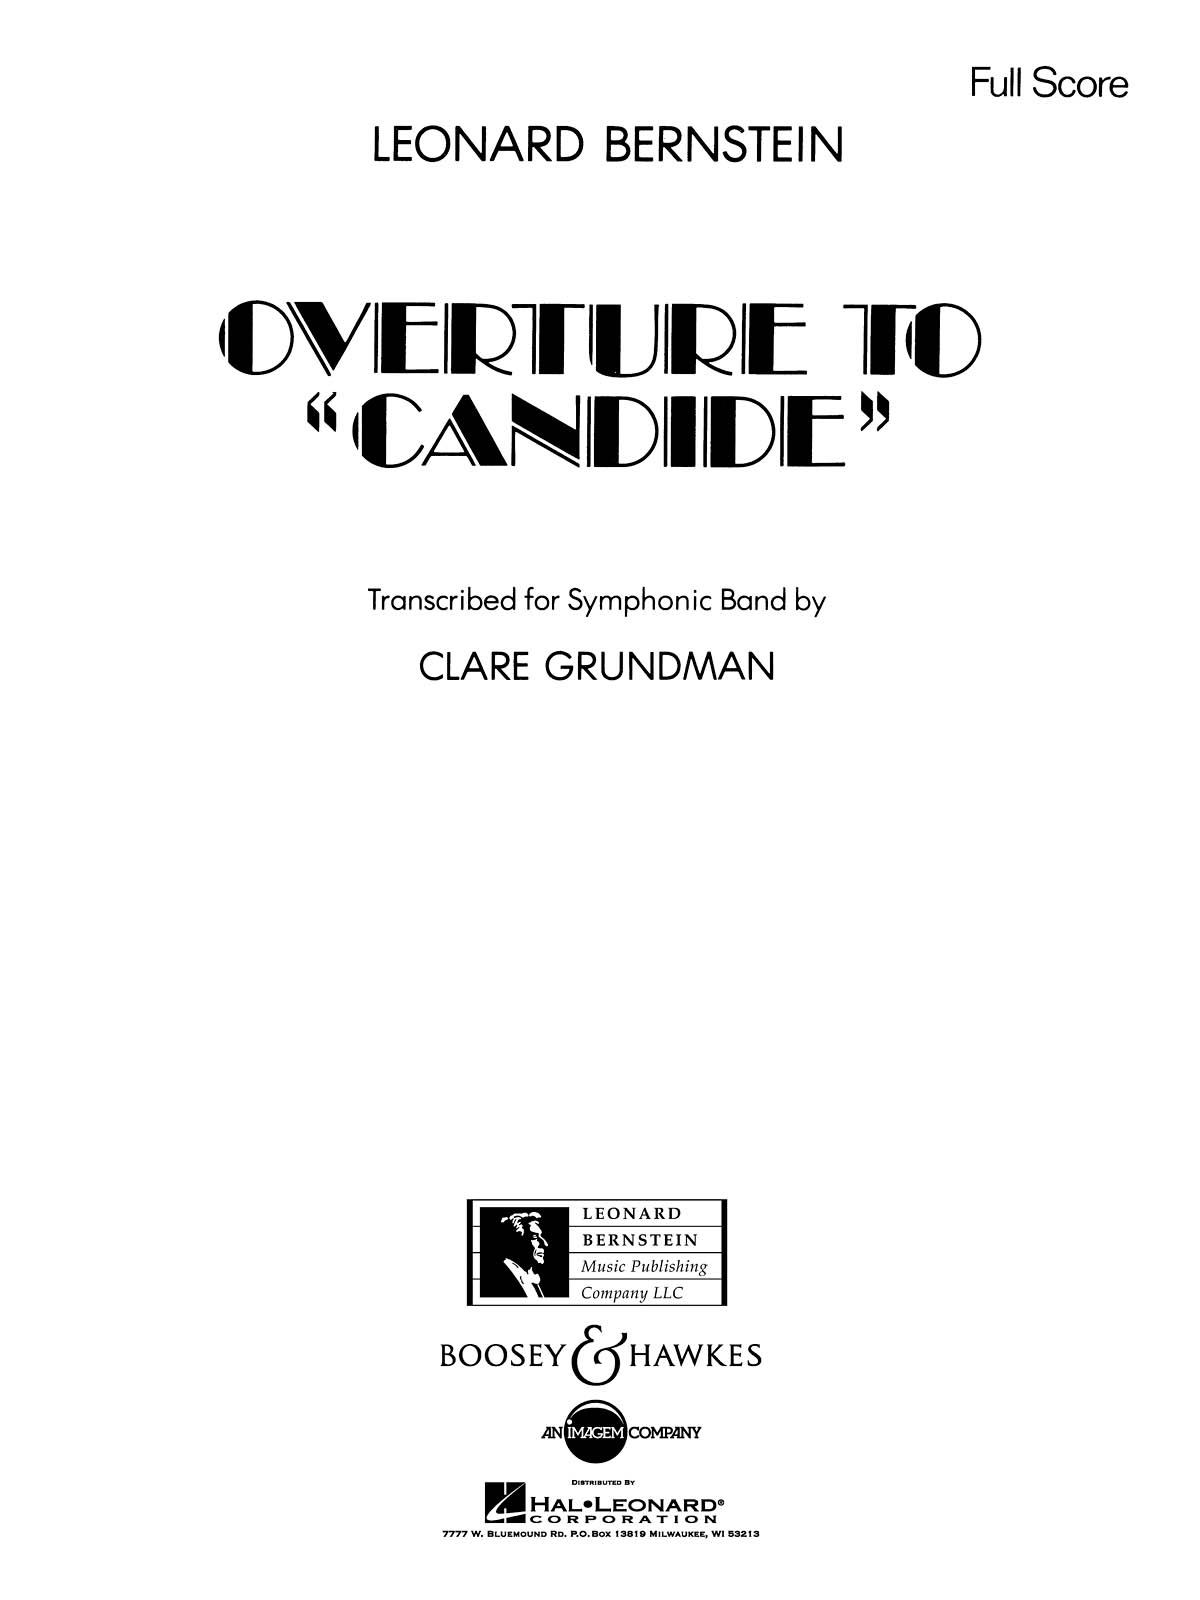 Leonard Bernstein: Candide Overture: Concert Band: Score